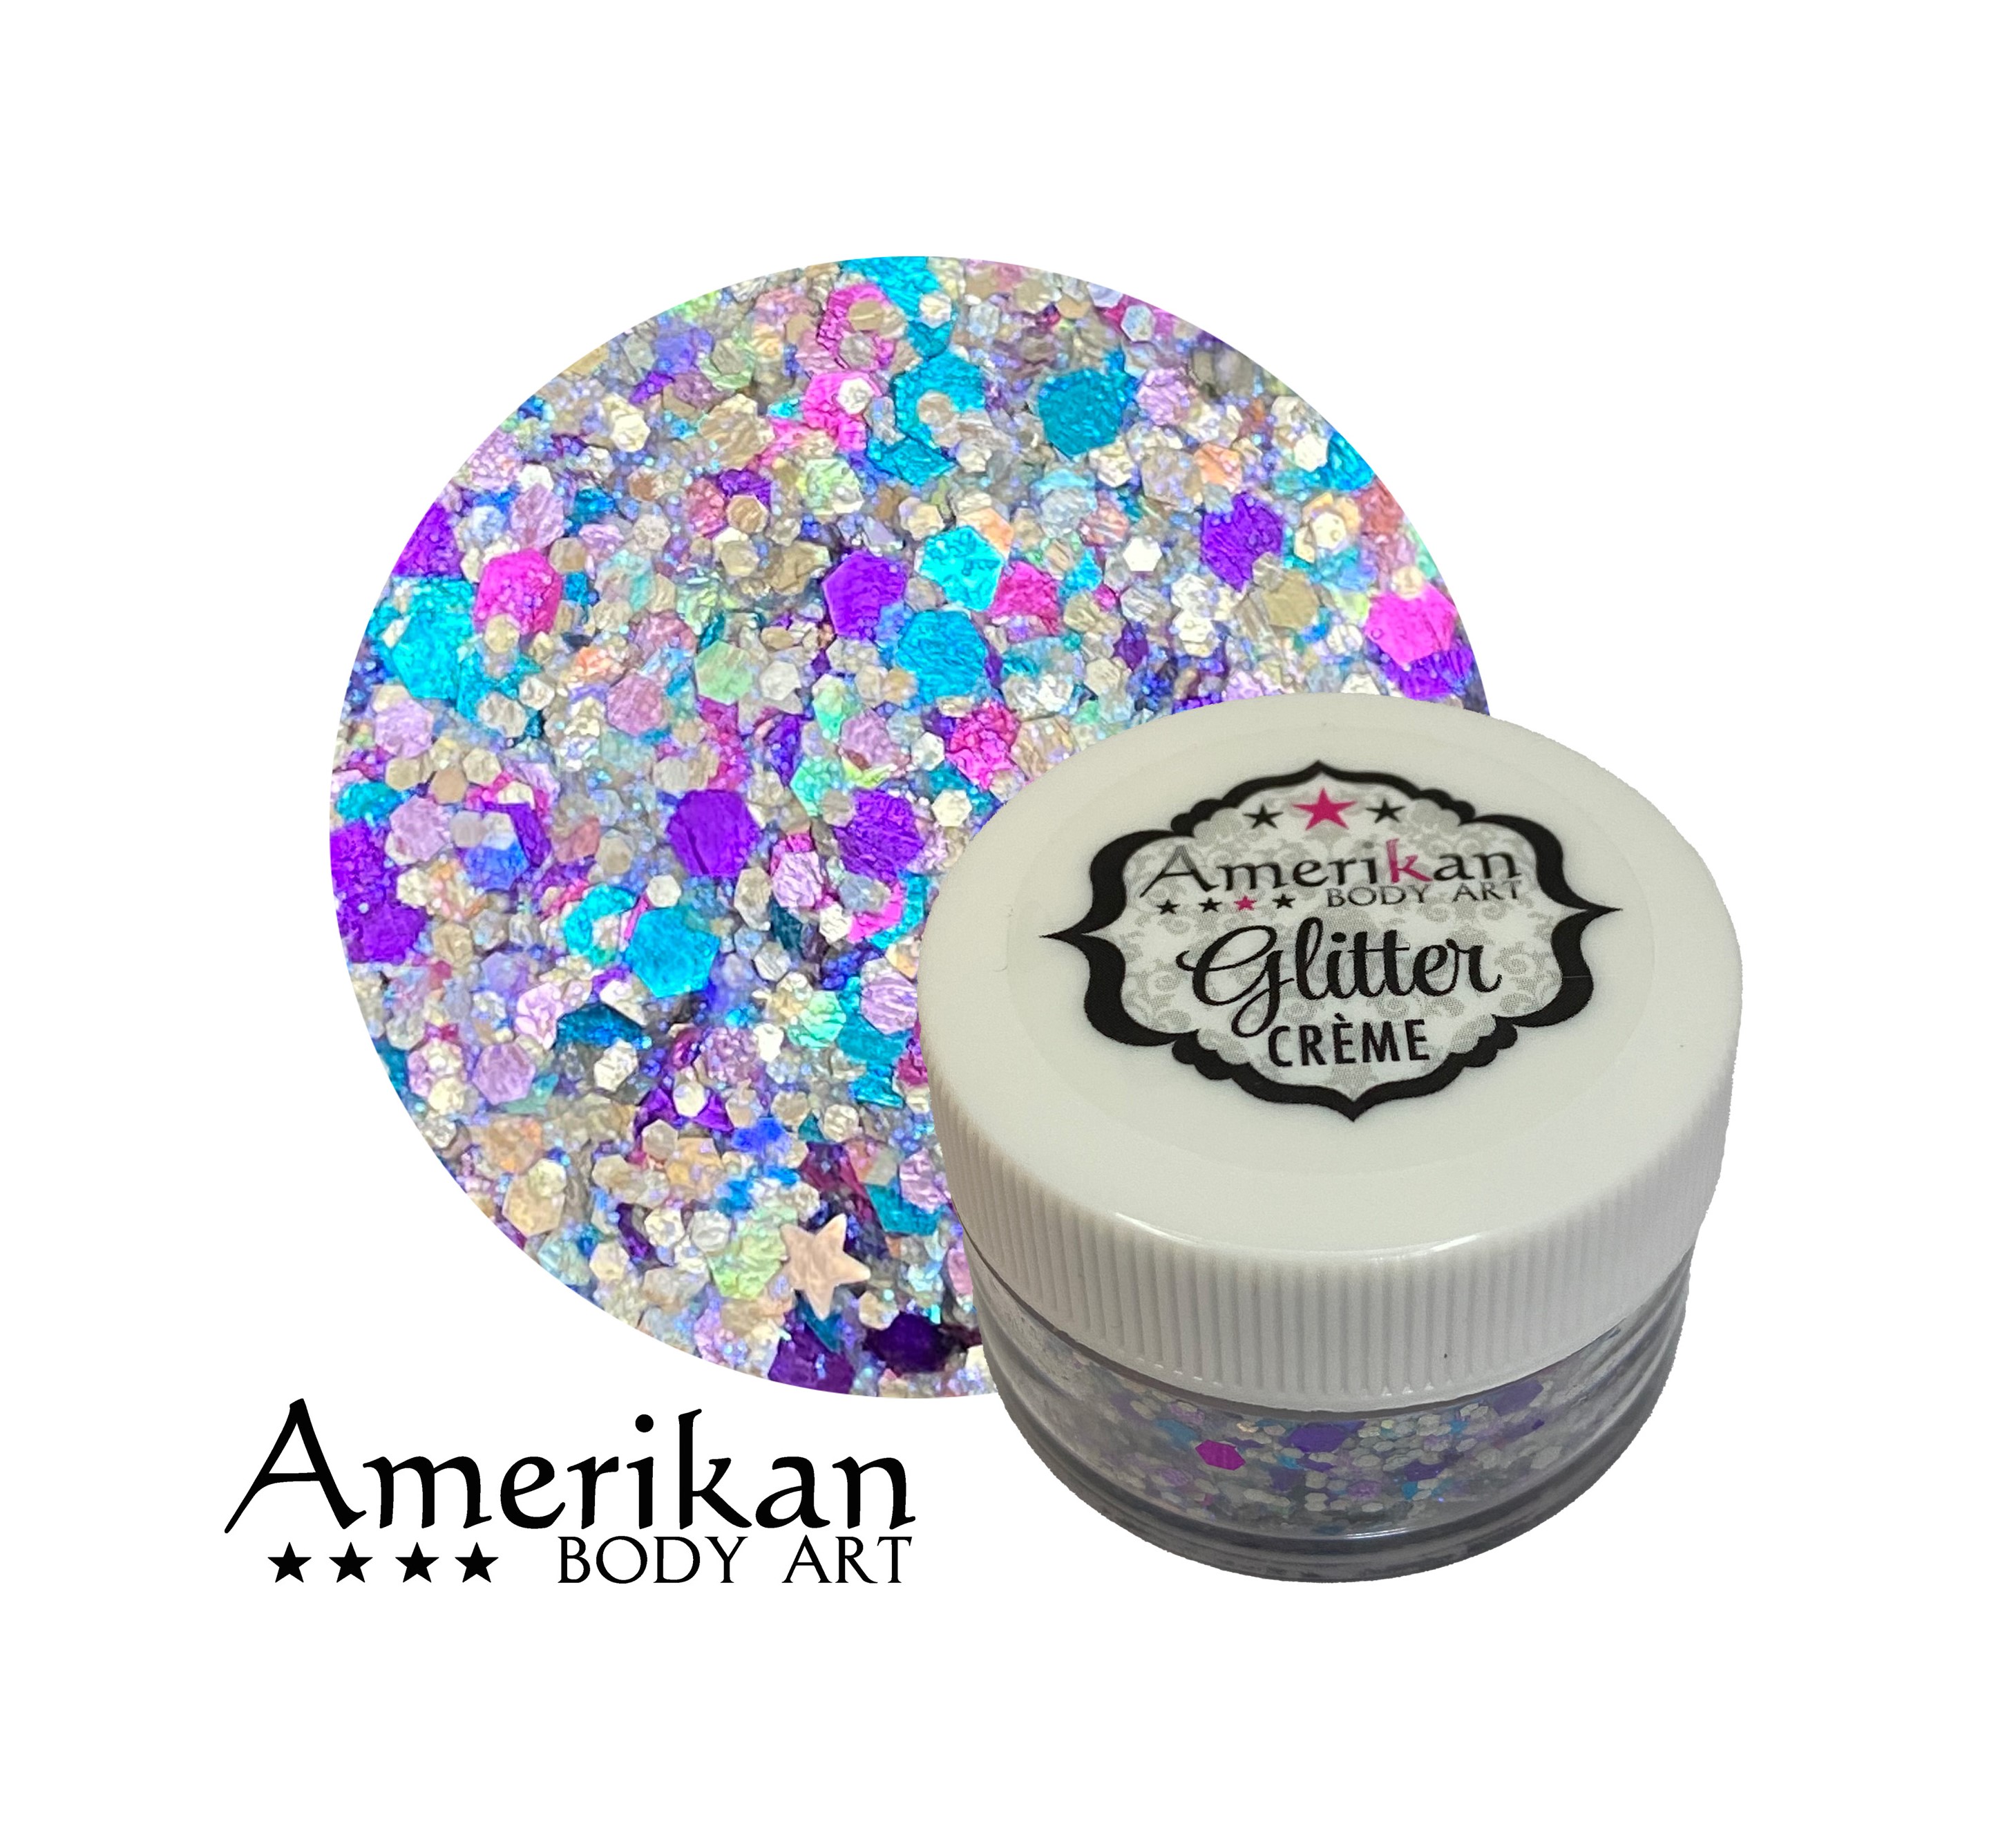 Galaxy Glitter Creme 15g